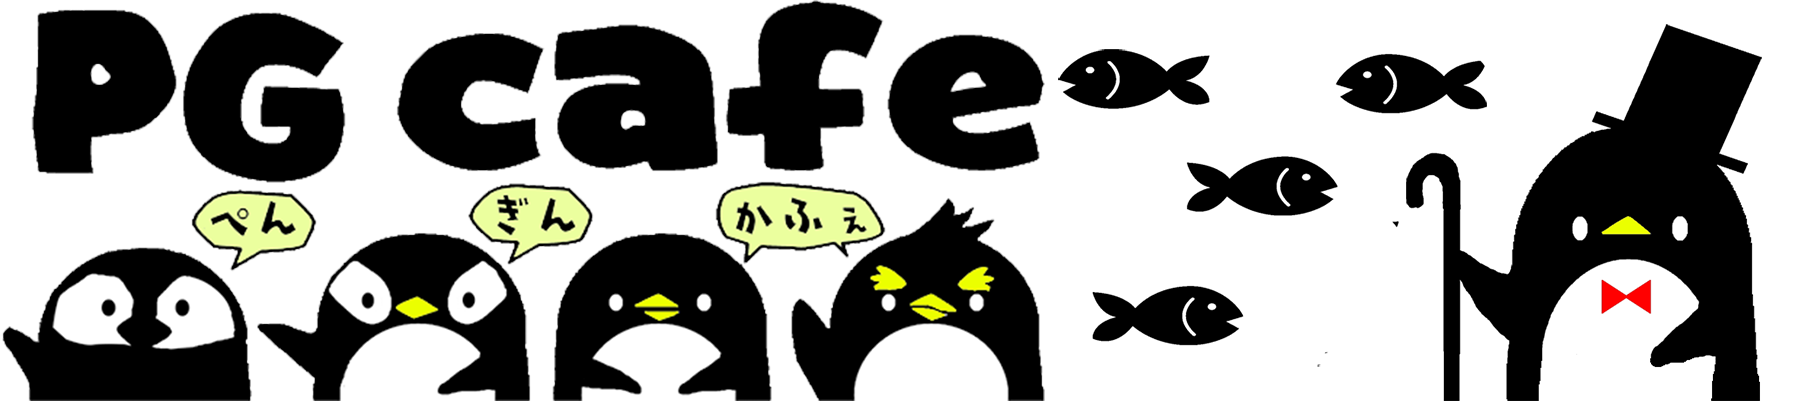 PGcafe-ペンギンカフェ-